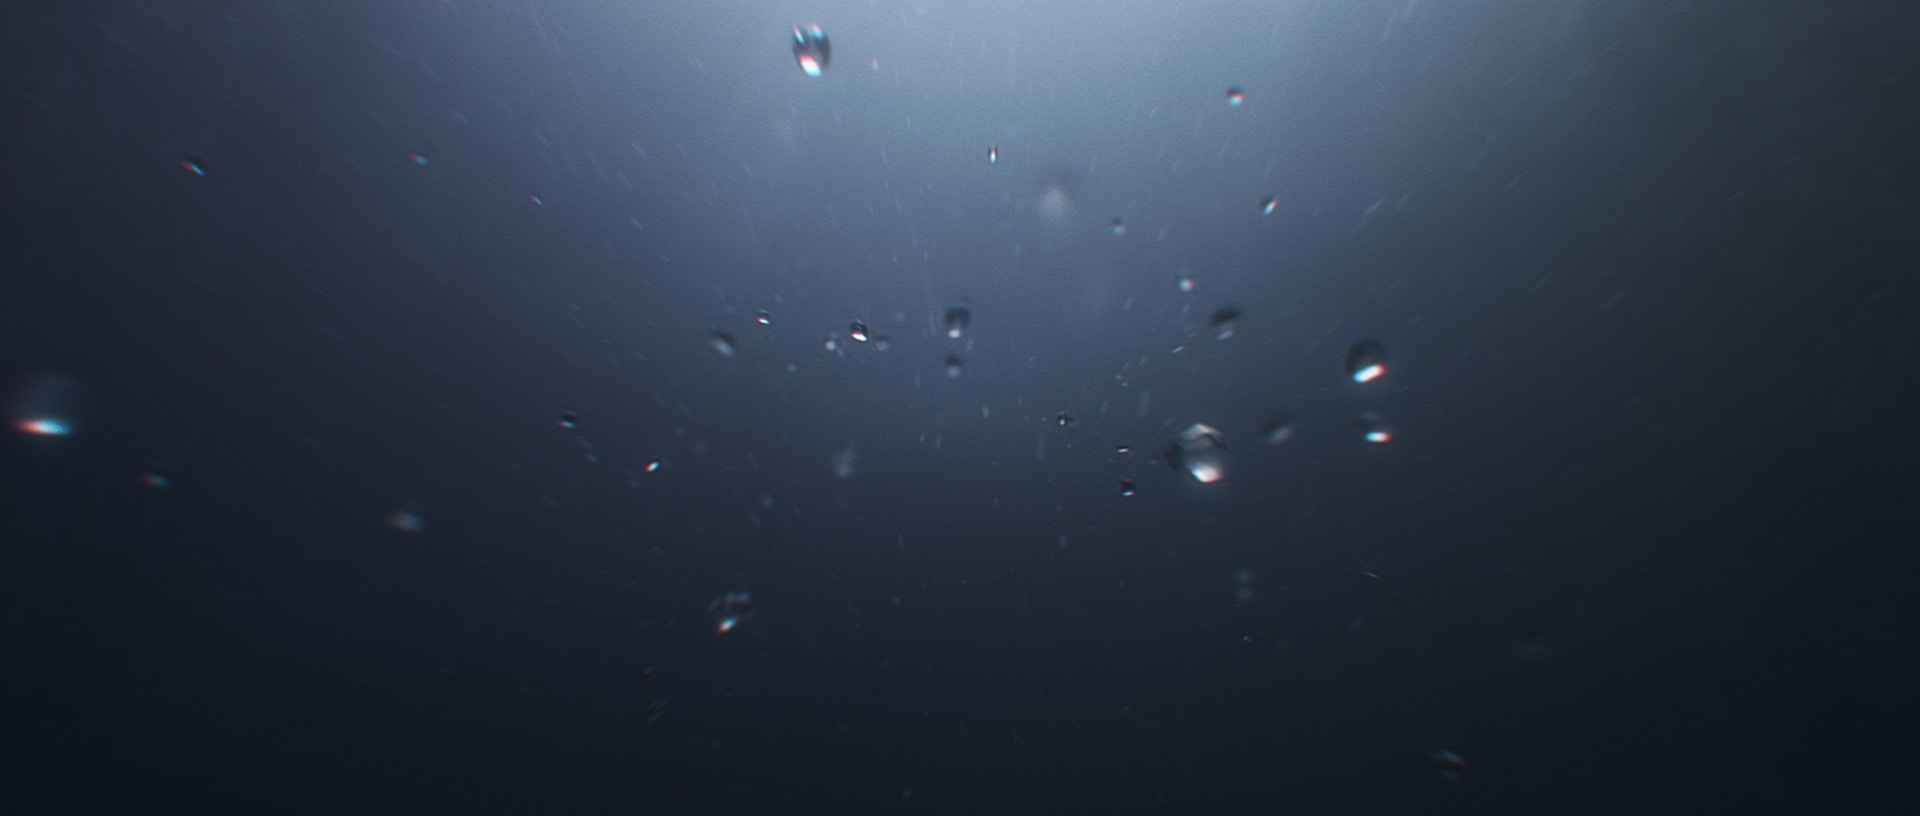 Bubbles underwater in a dark ocean.